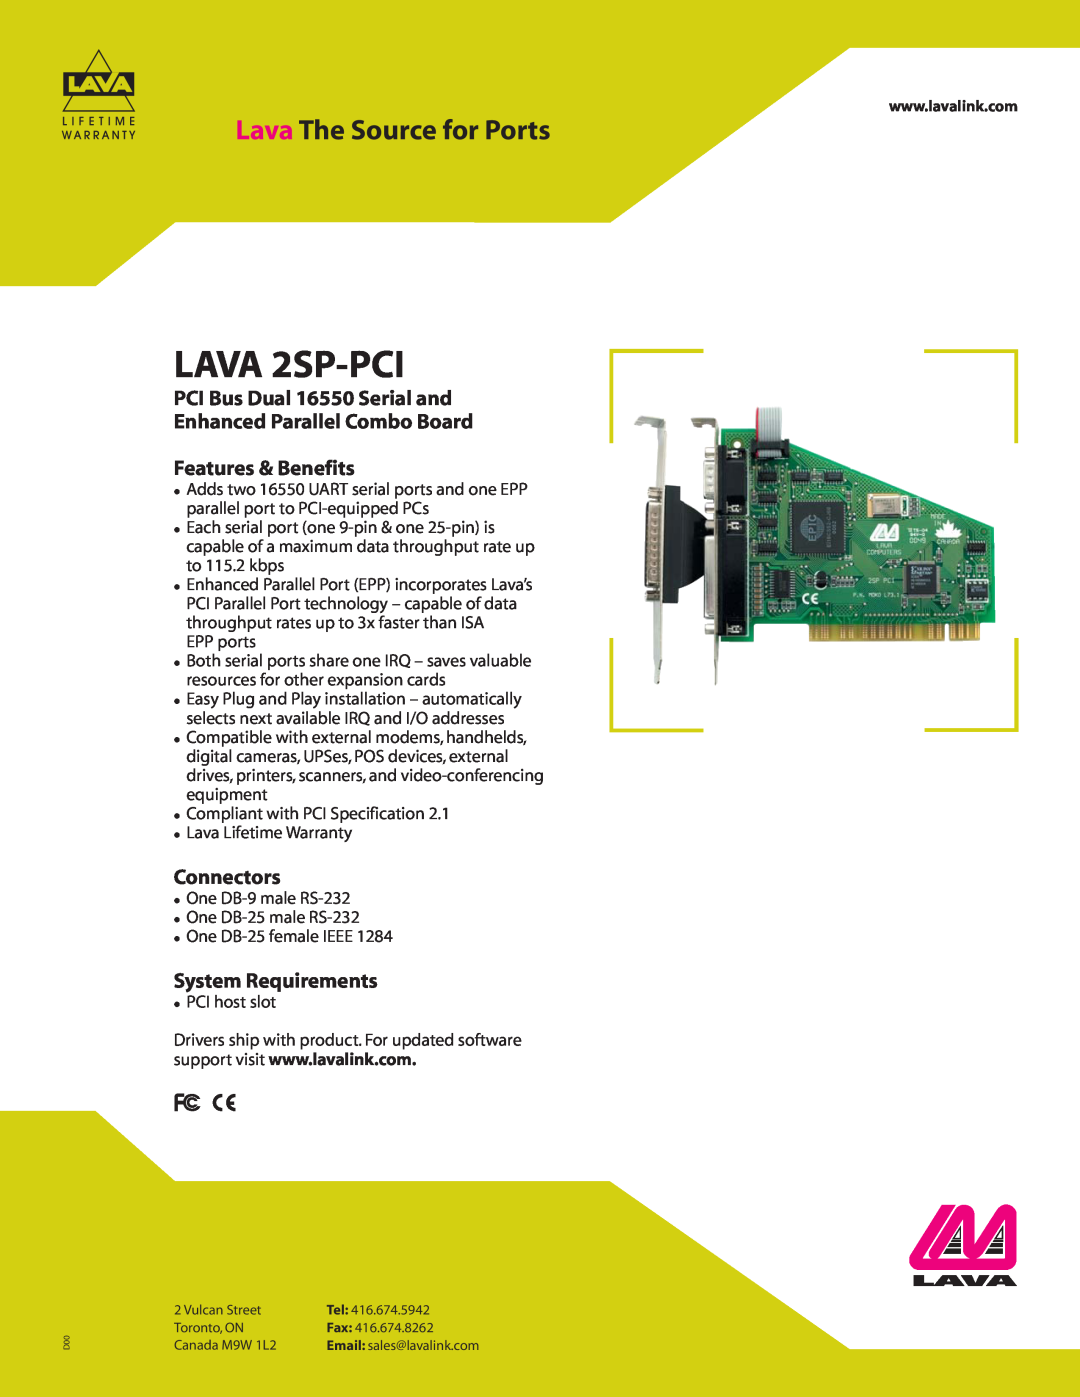 Lava Computer warranty LAVA 2SP-PCI, Lava The Source for Ports, Features & Benefits, Connectors, System Requirements 